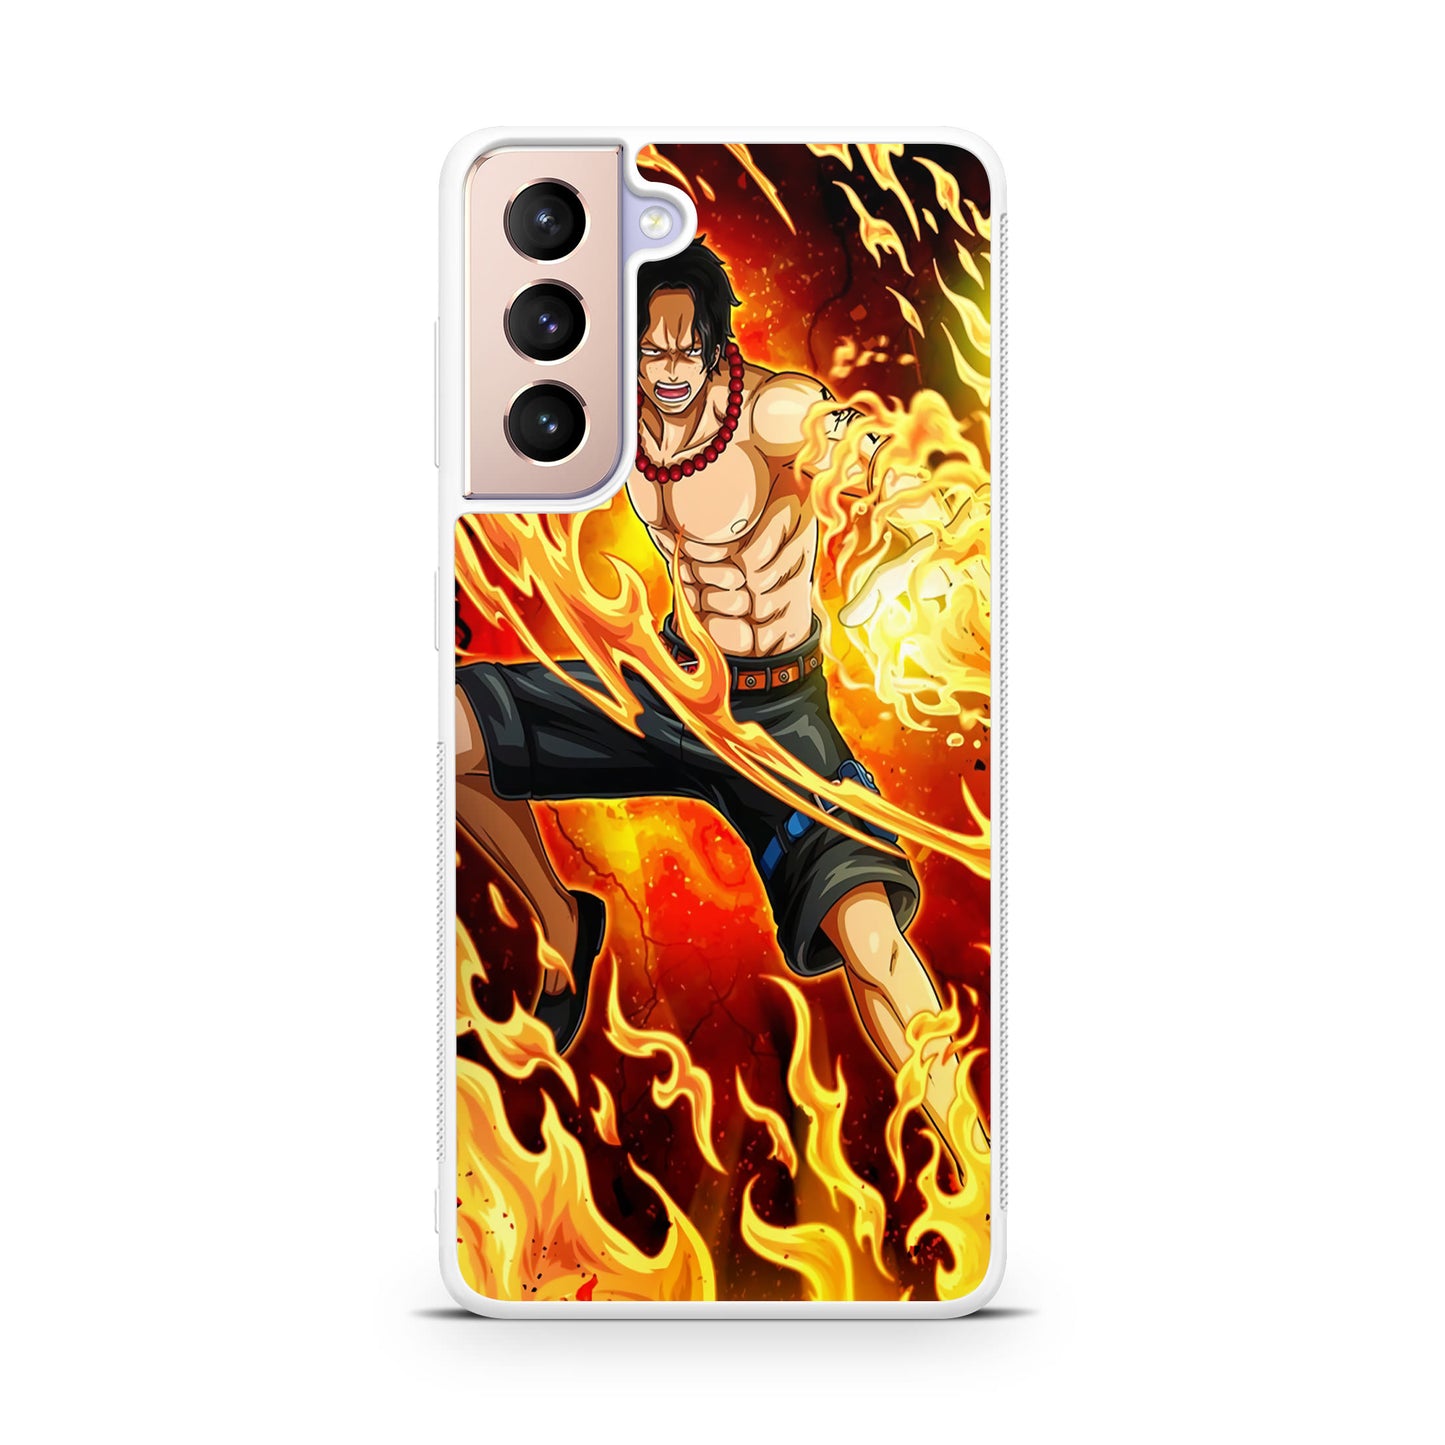 Ace Fire Fist Galaxy S21 / S21 Plus / S21 FE 5G Case